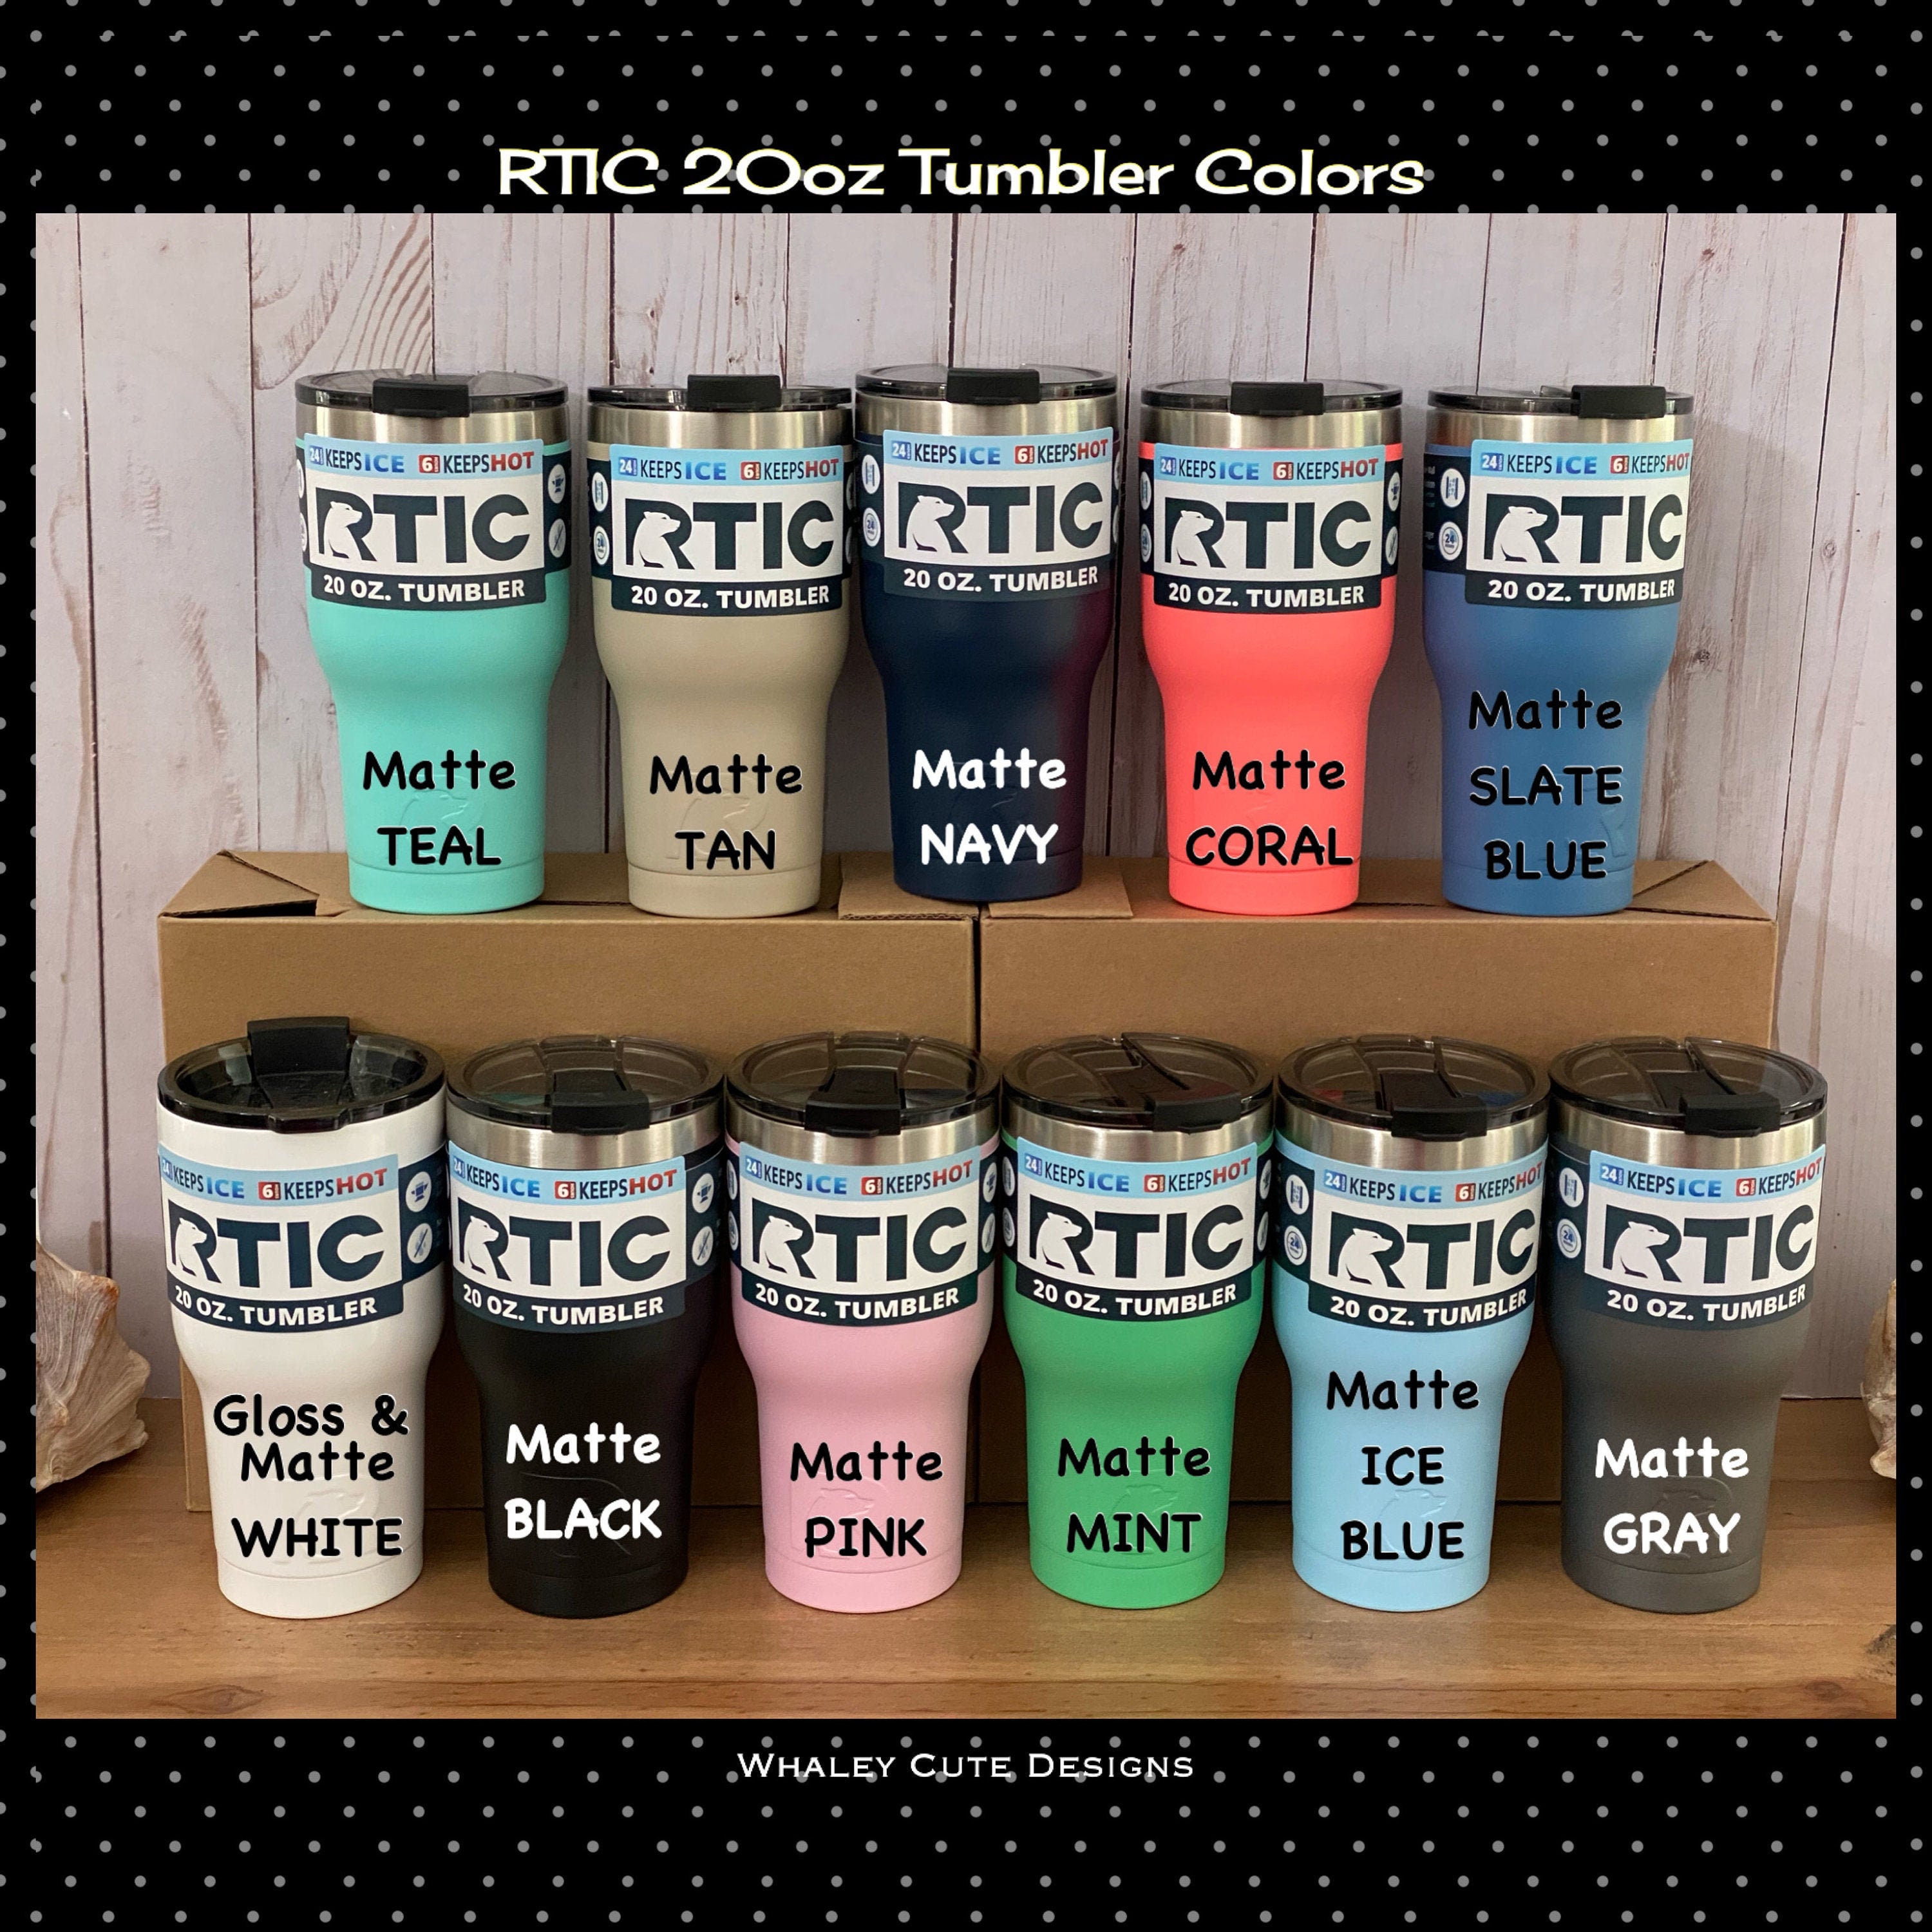 Personalized RTIC 20 oz Tumbler - Powder Coated